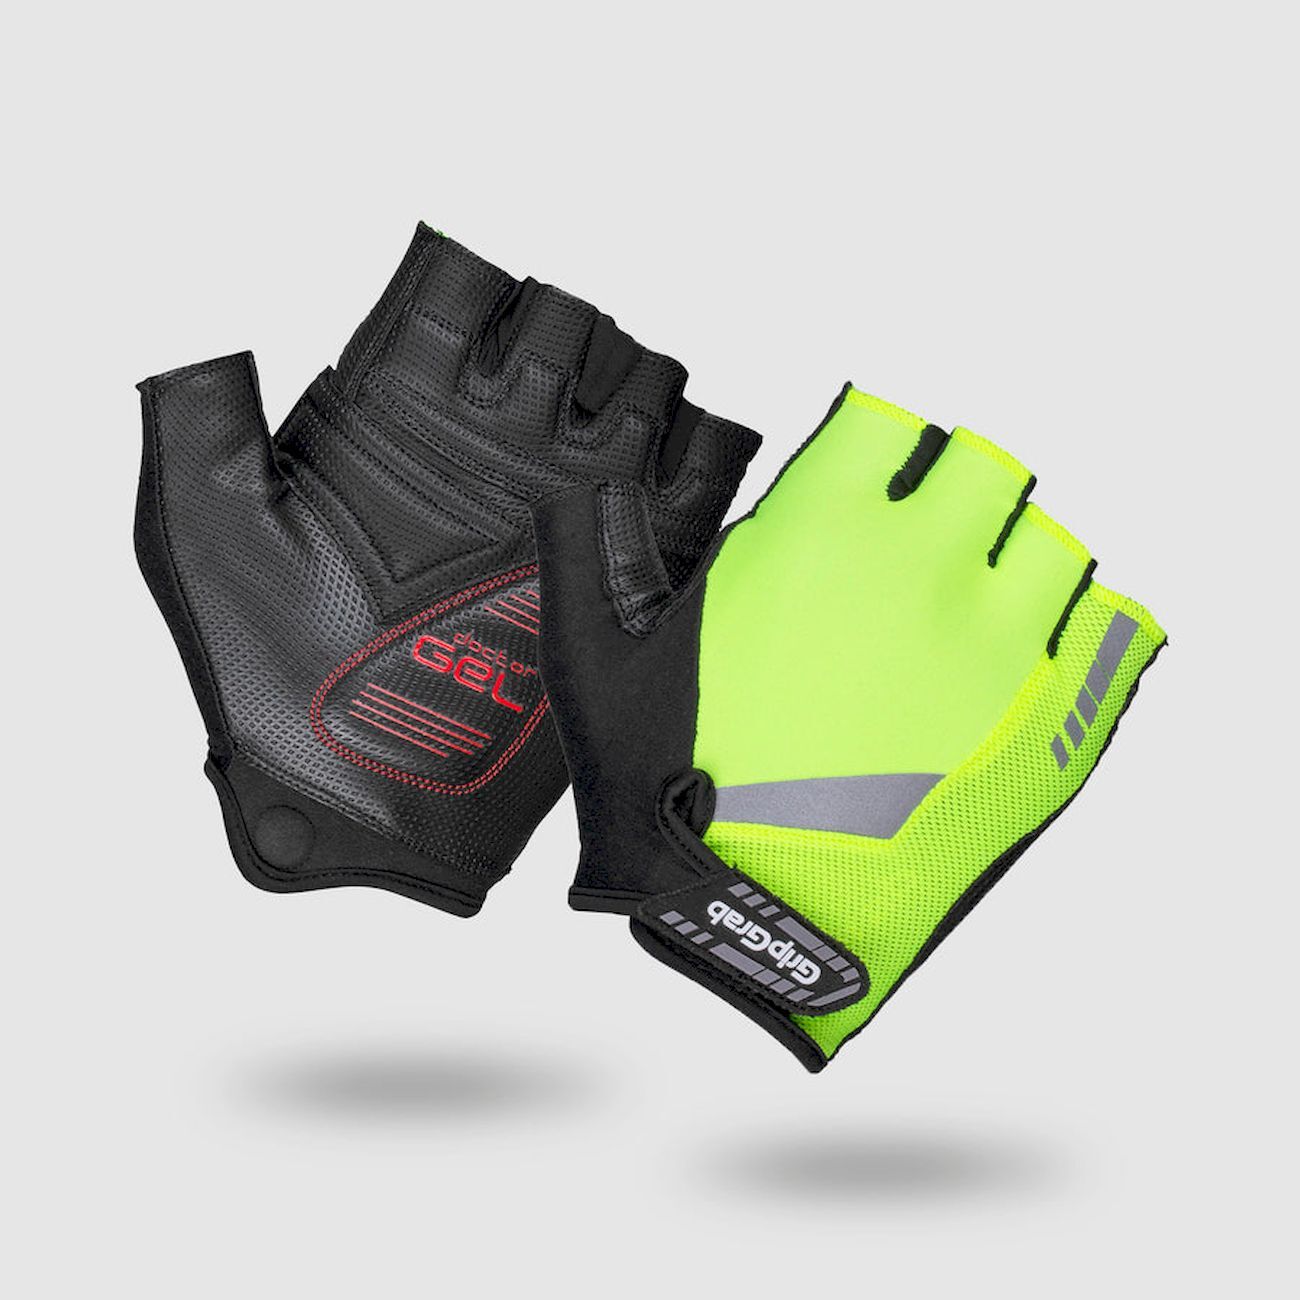 Grip Grab ProGel Hi-Vis Padded Gloves - Short finger gloves - Men's